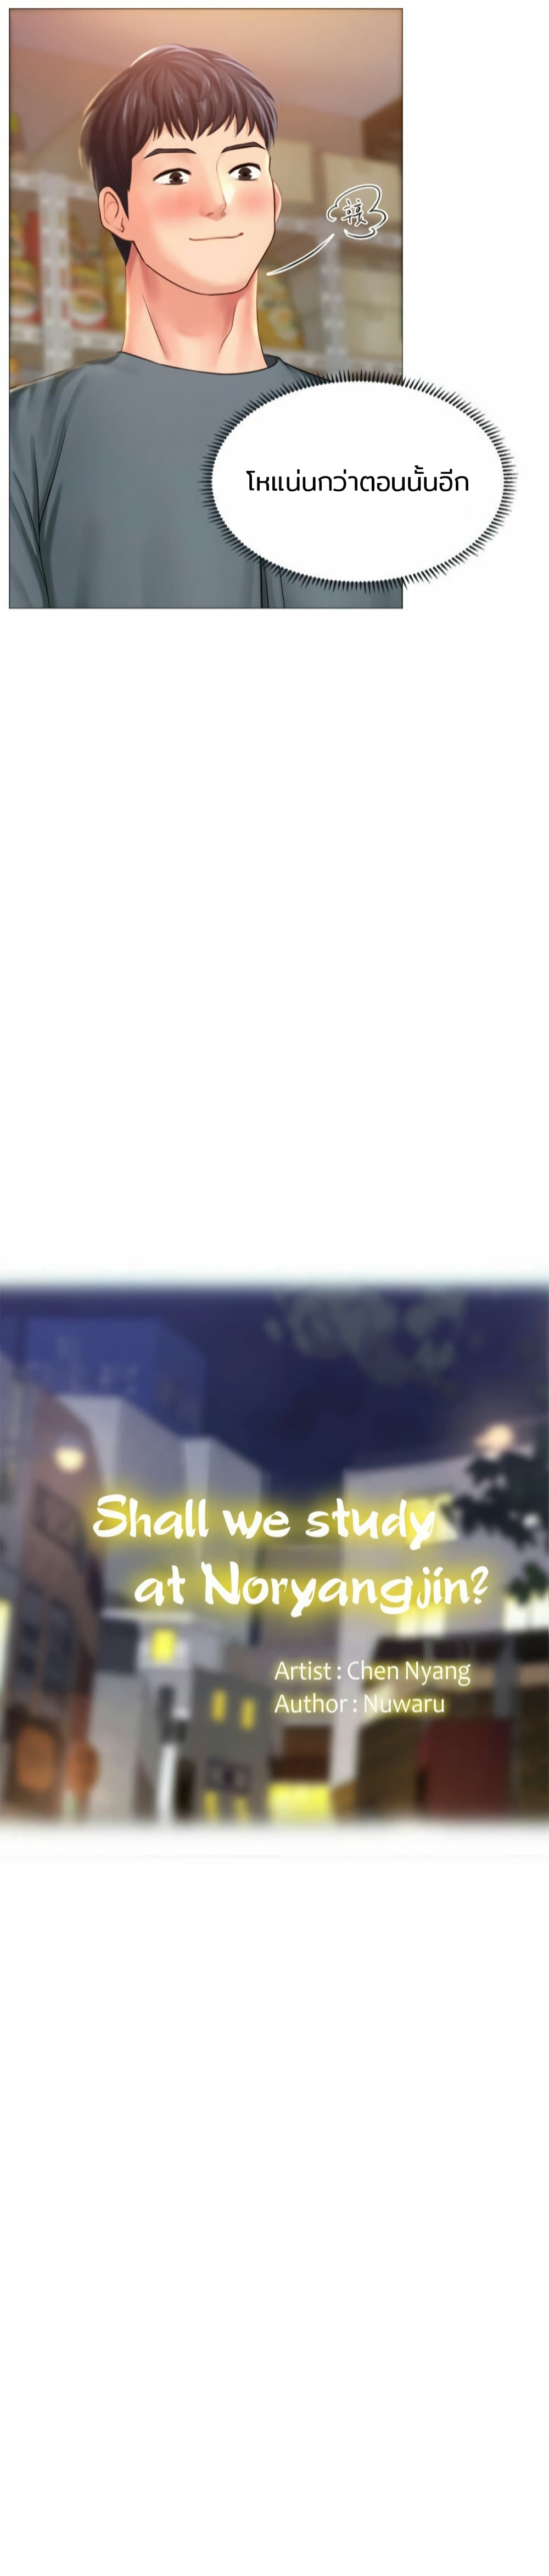 Should I Study at Noryangjin? 23-23